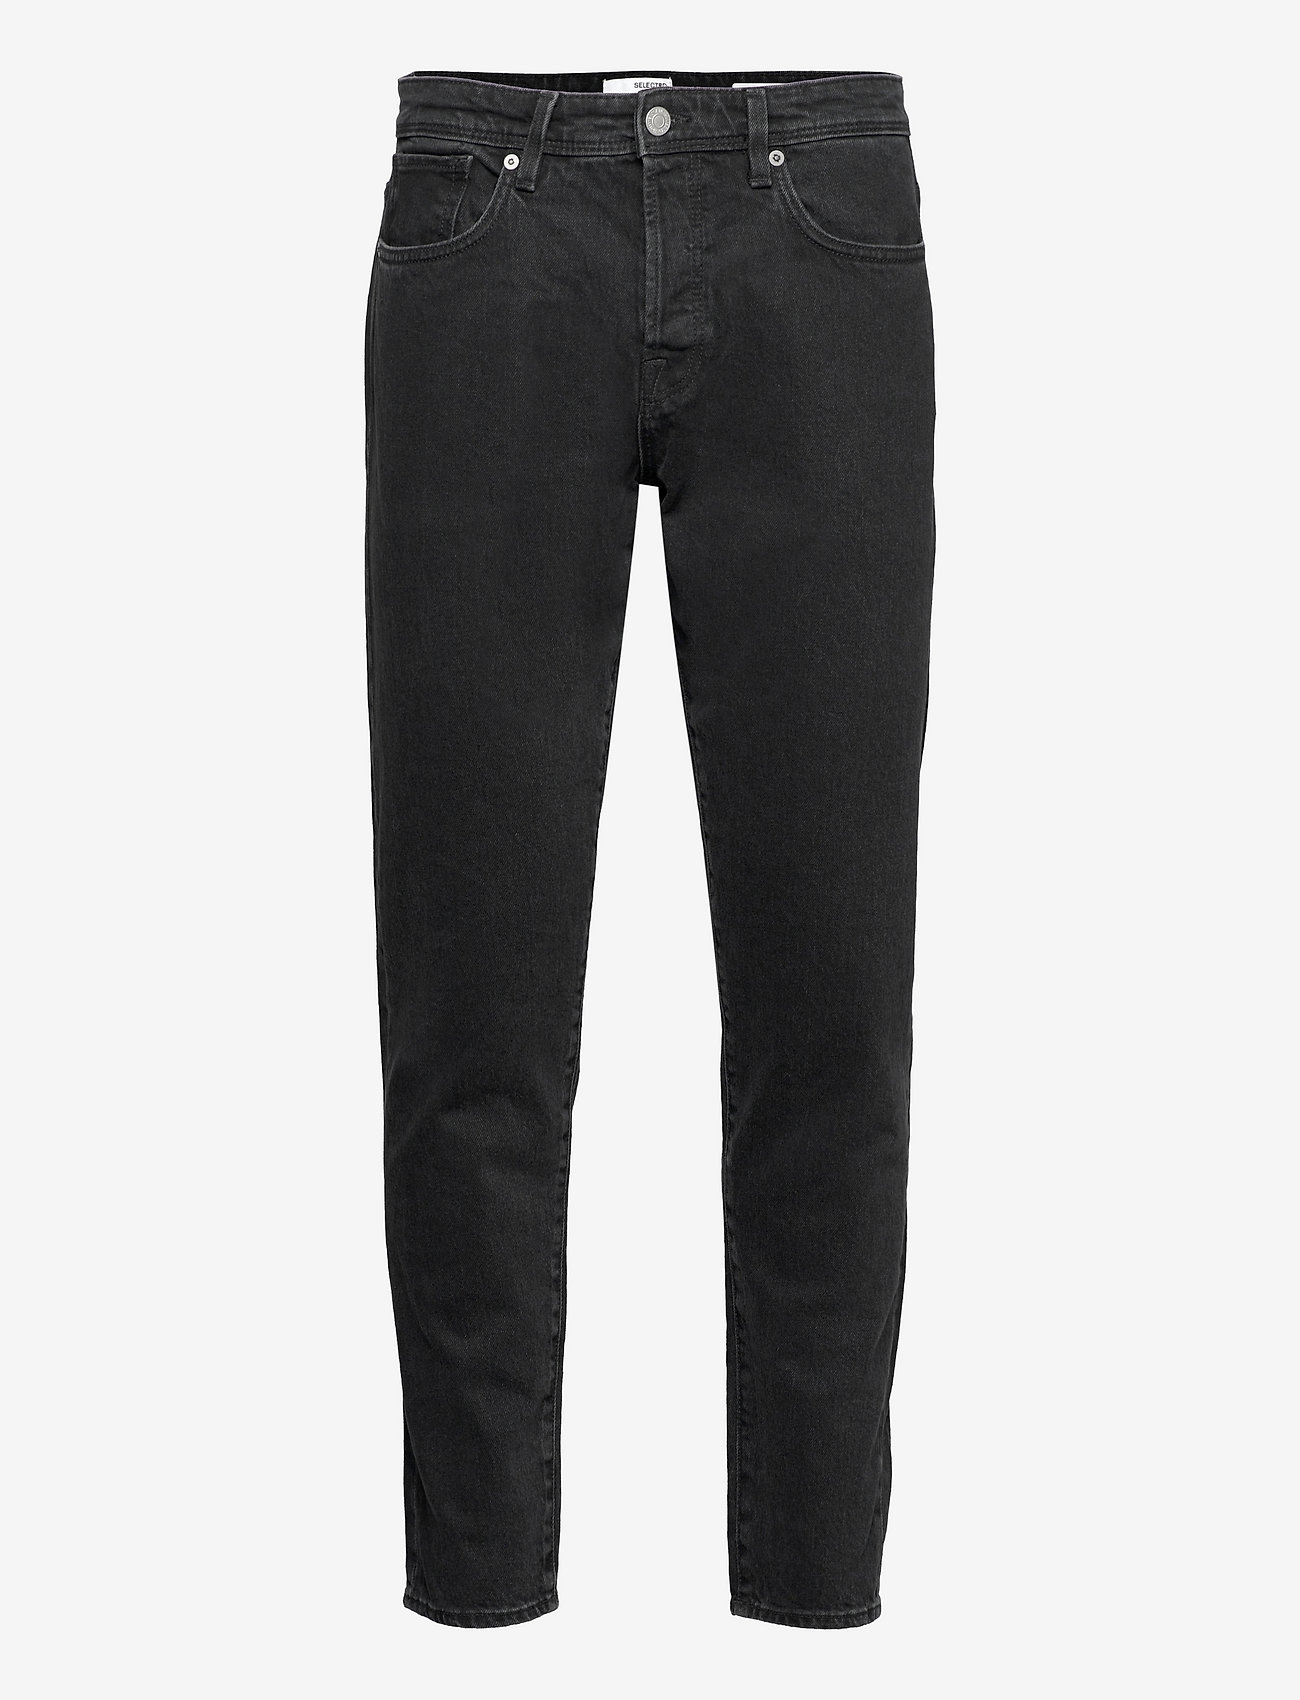 Selected Homme - SLHSLIMTAPE-TOBY 3072 BLACK JEANS U - slim jeans - black denim - 1